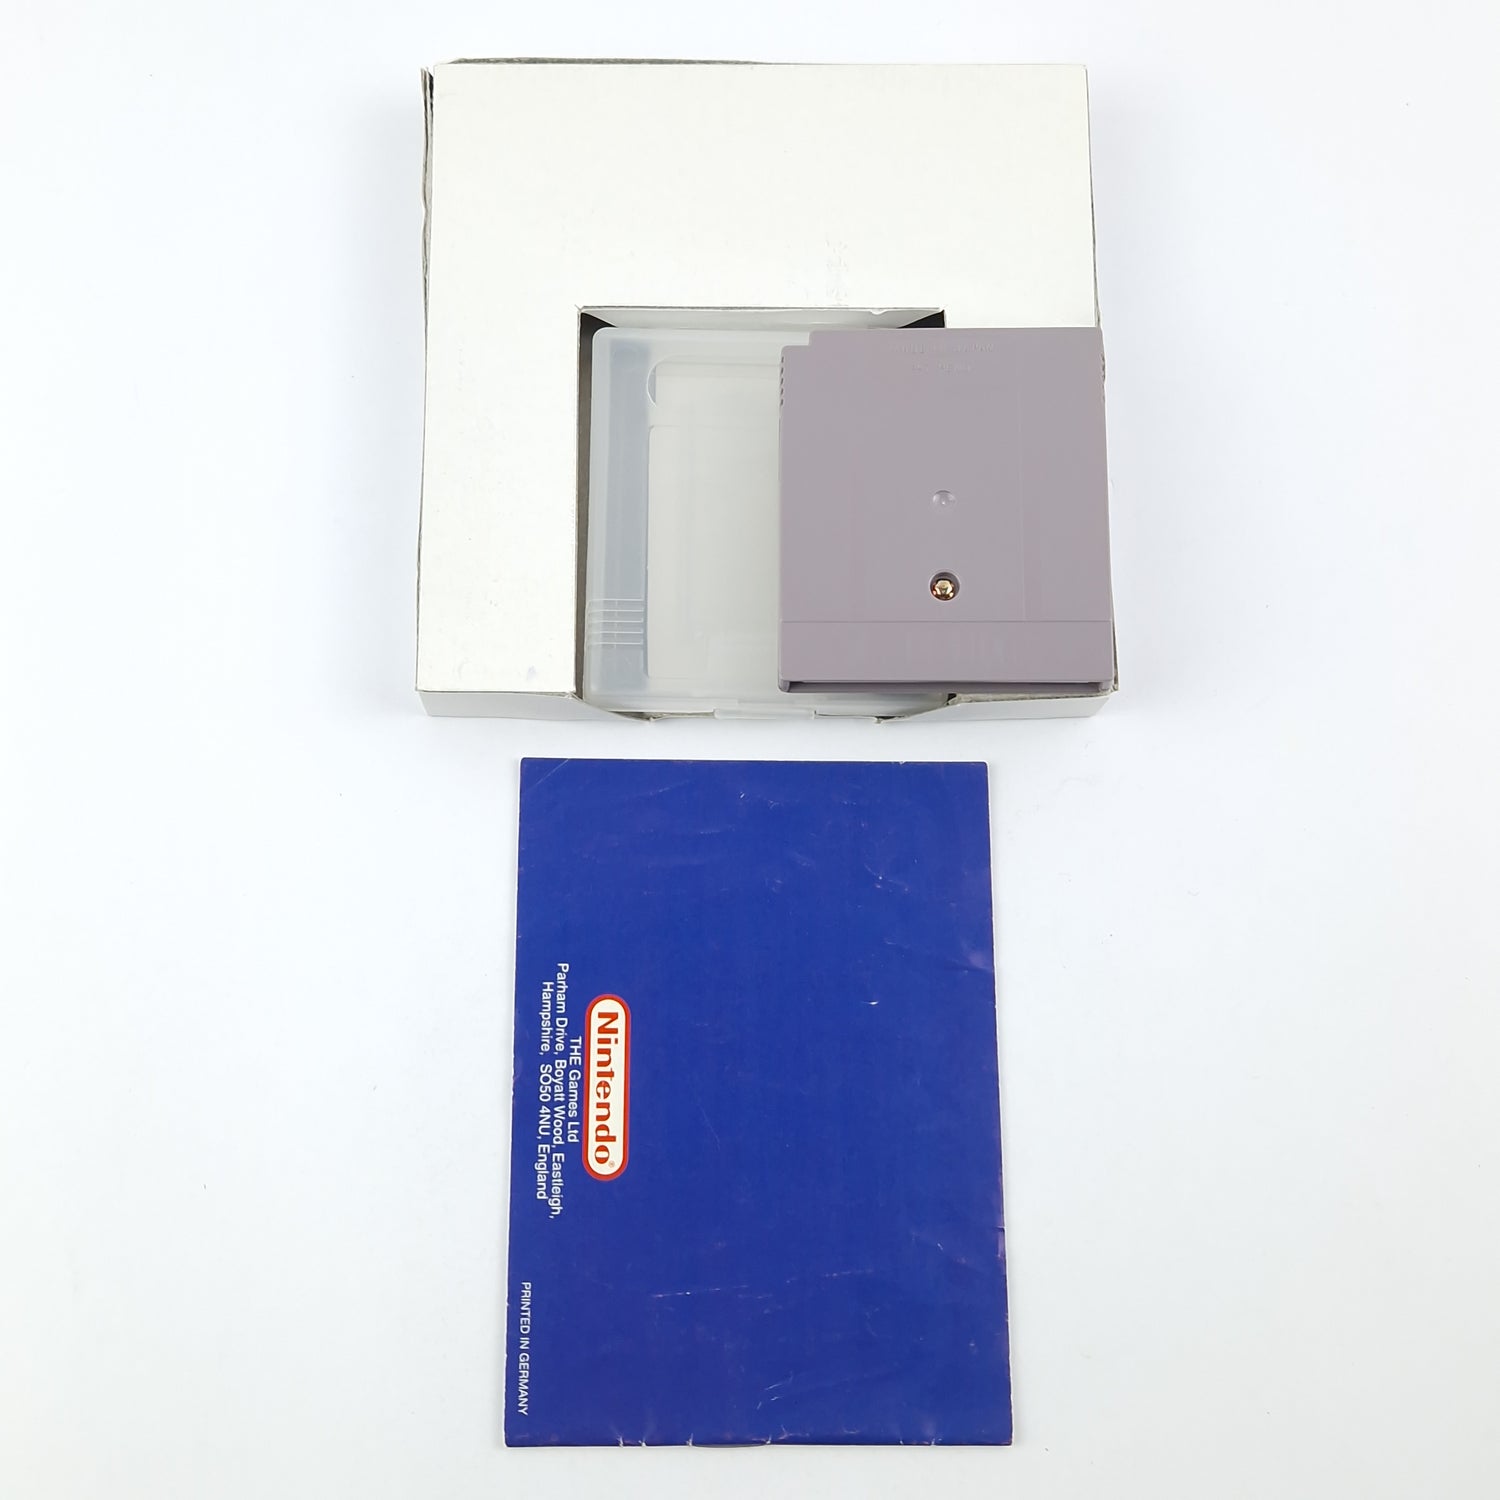 Nintendo Game Boy Classic Spiel : Warioland II - Modul Anleitung OVP / GAMEBOY